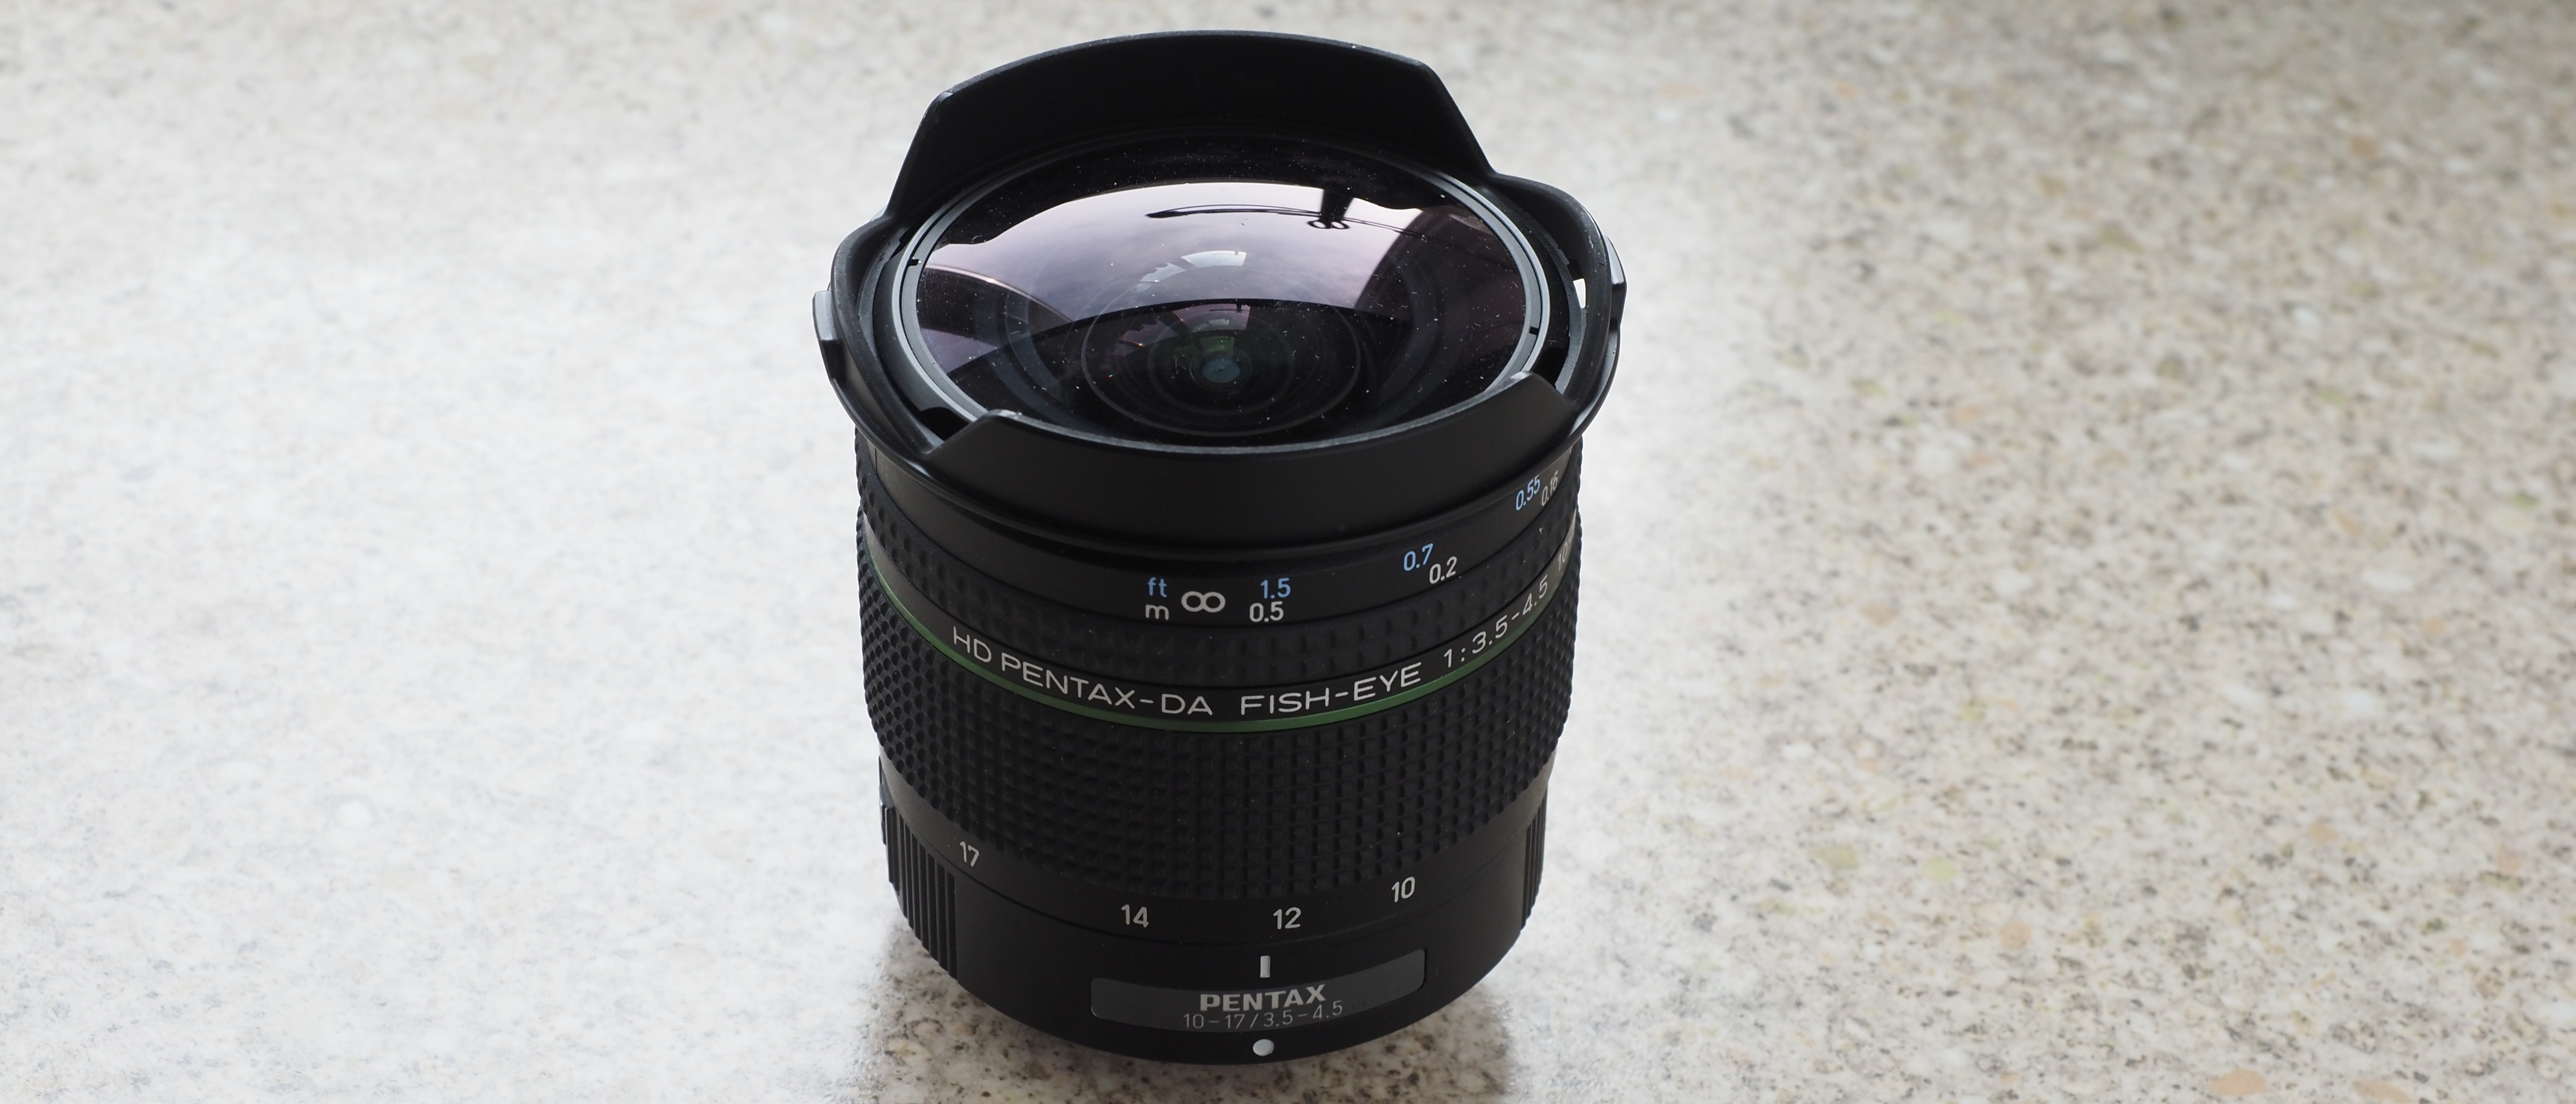 HD Pentax-DA Fisheye 10-17mm F3.5-4.5 ED review | Digital 